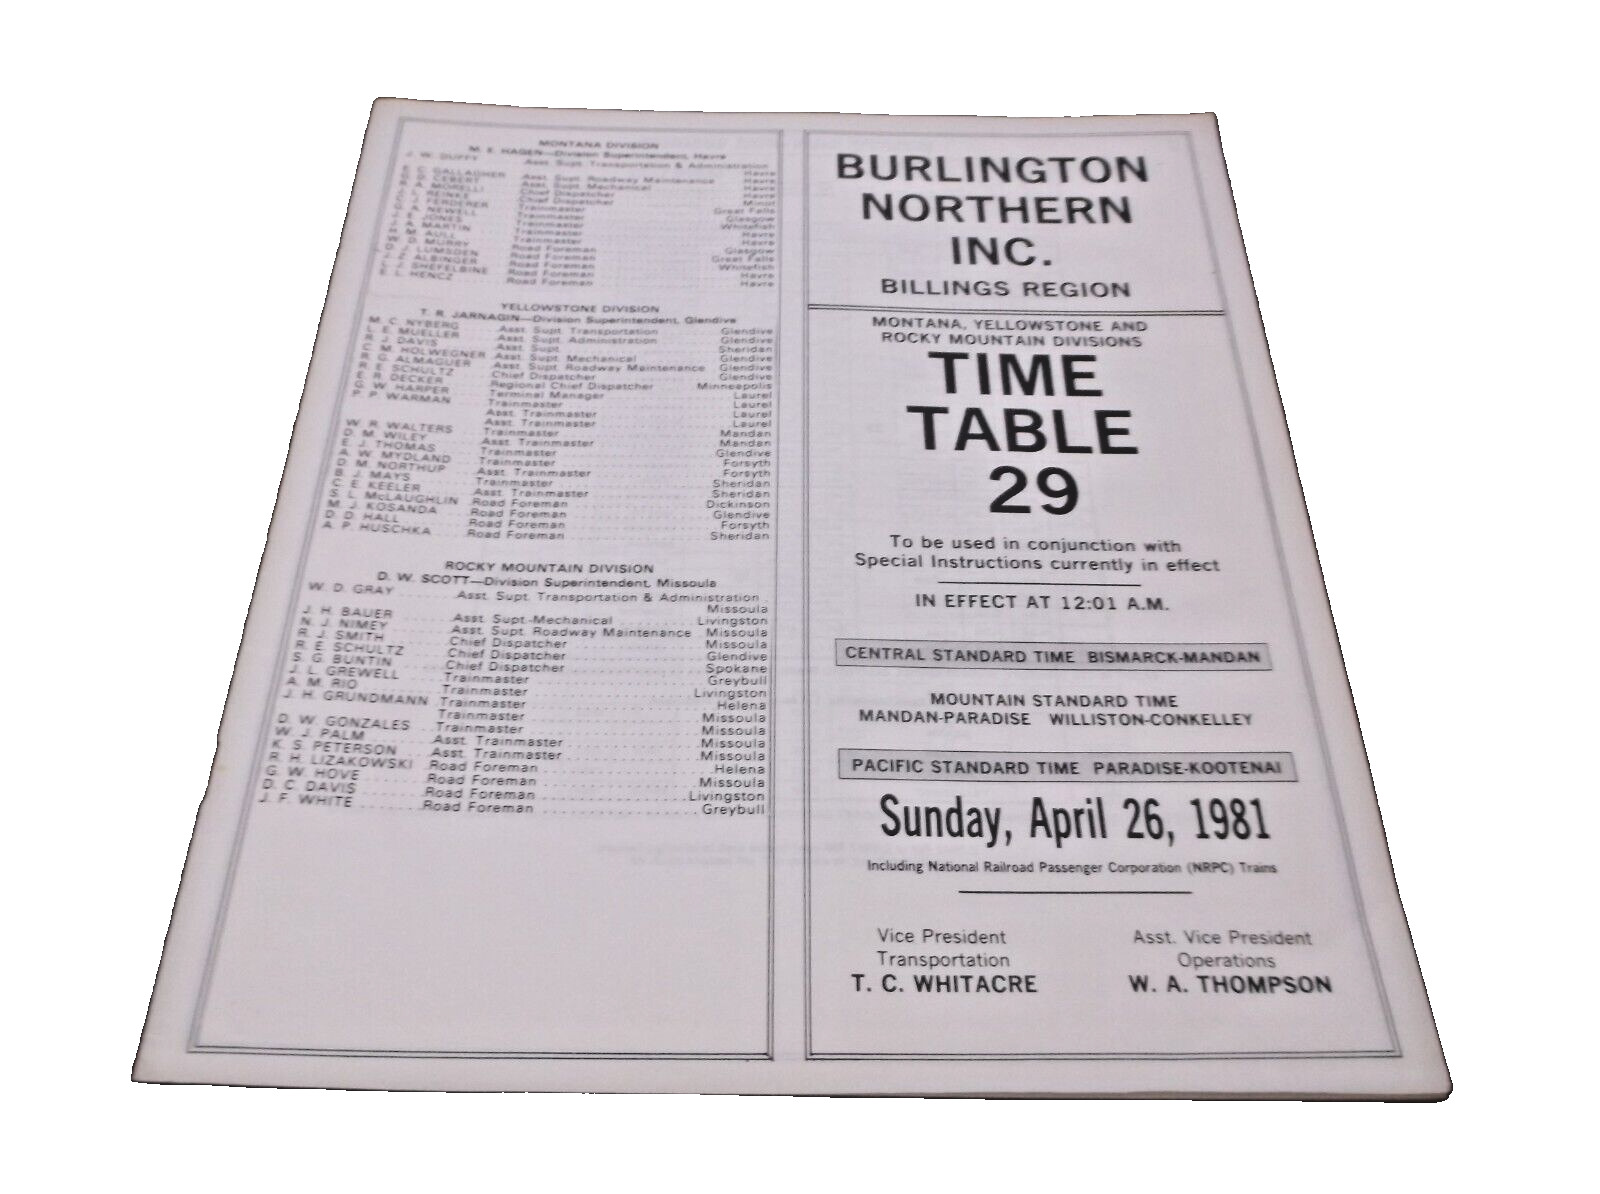 APRIL 1981 BURLINGTON NORTHERN BILLINGS REGION EMPLOYEE TIMETABLE #29